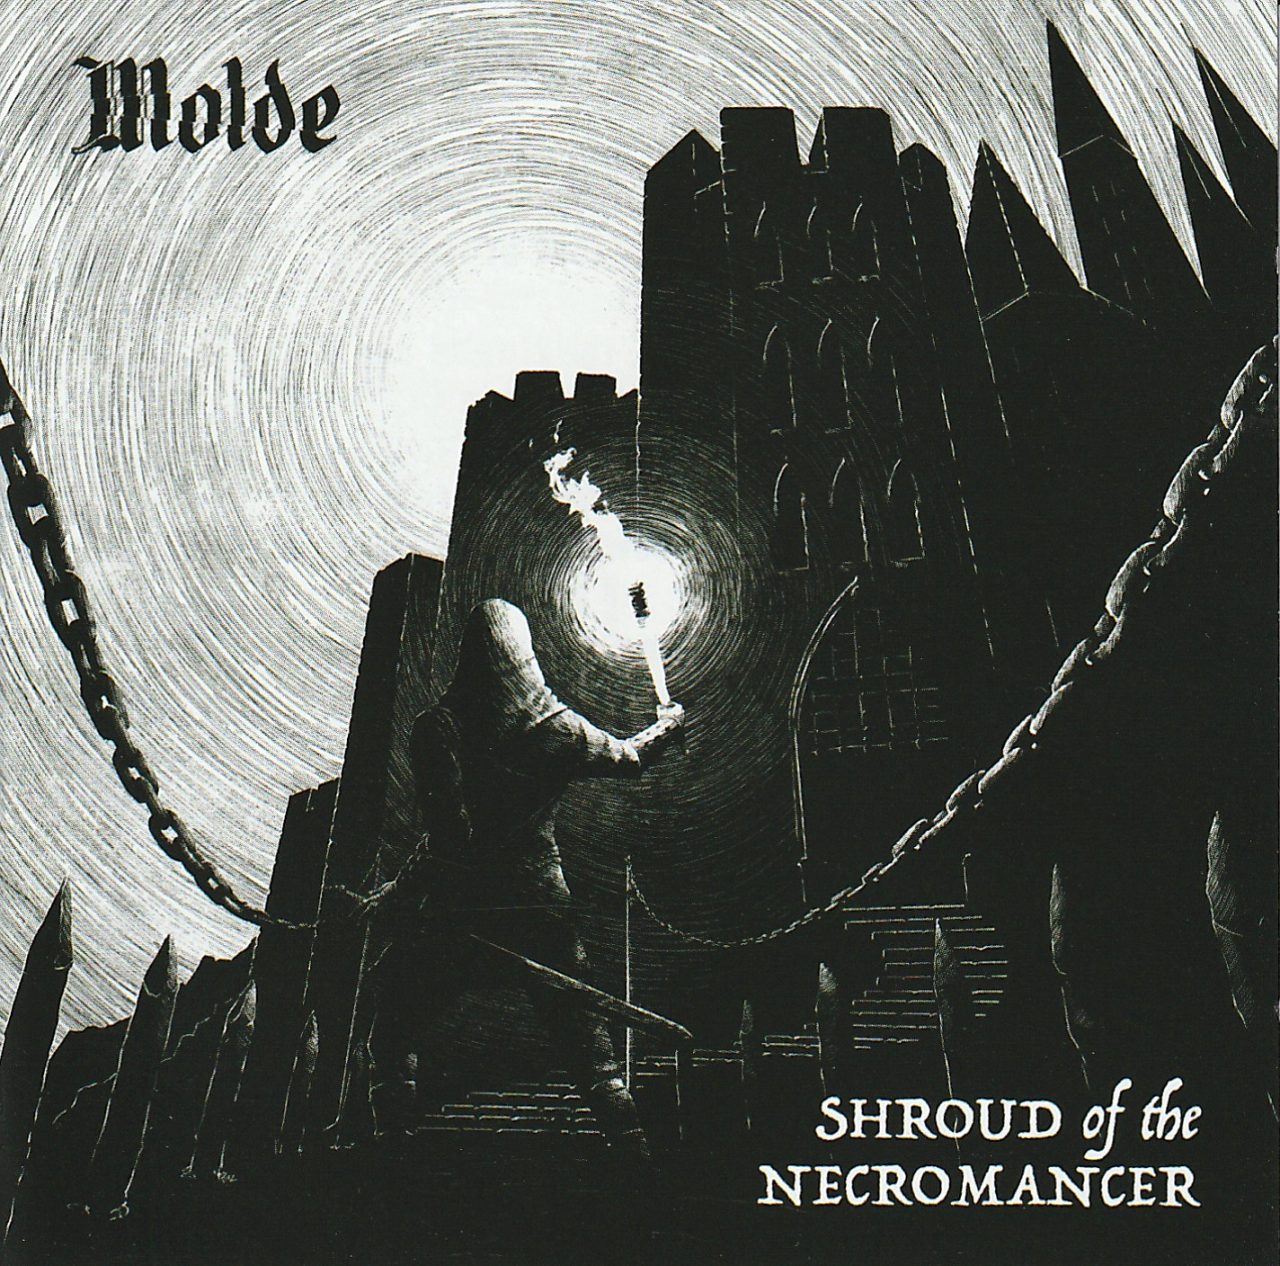 MOLDE - Shroud of the necromancer